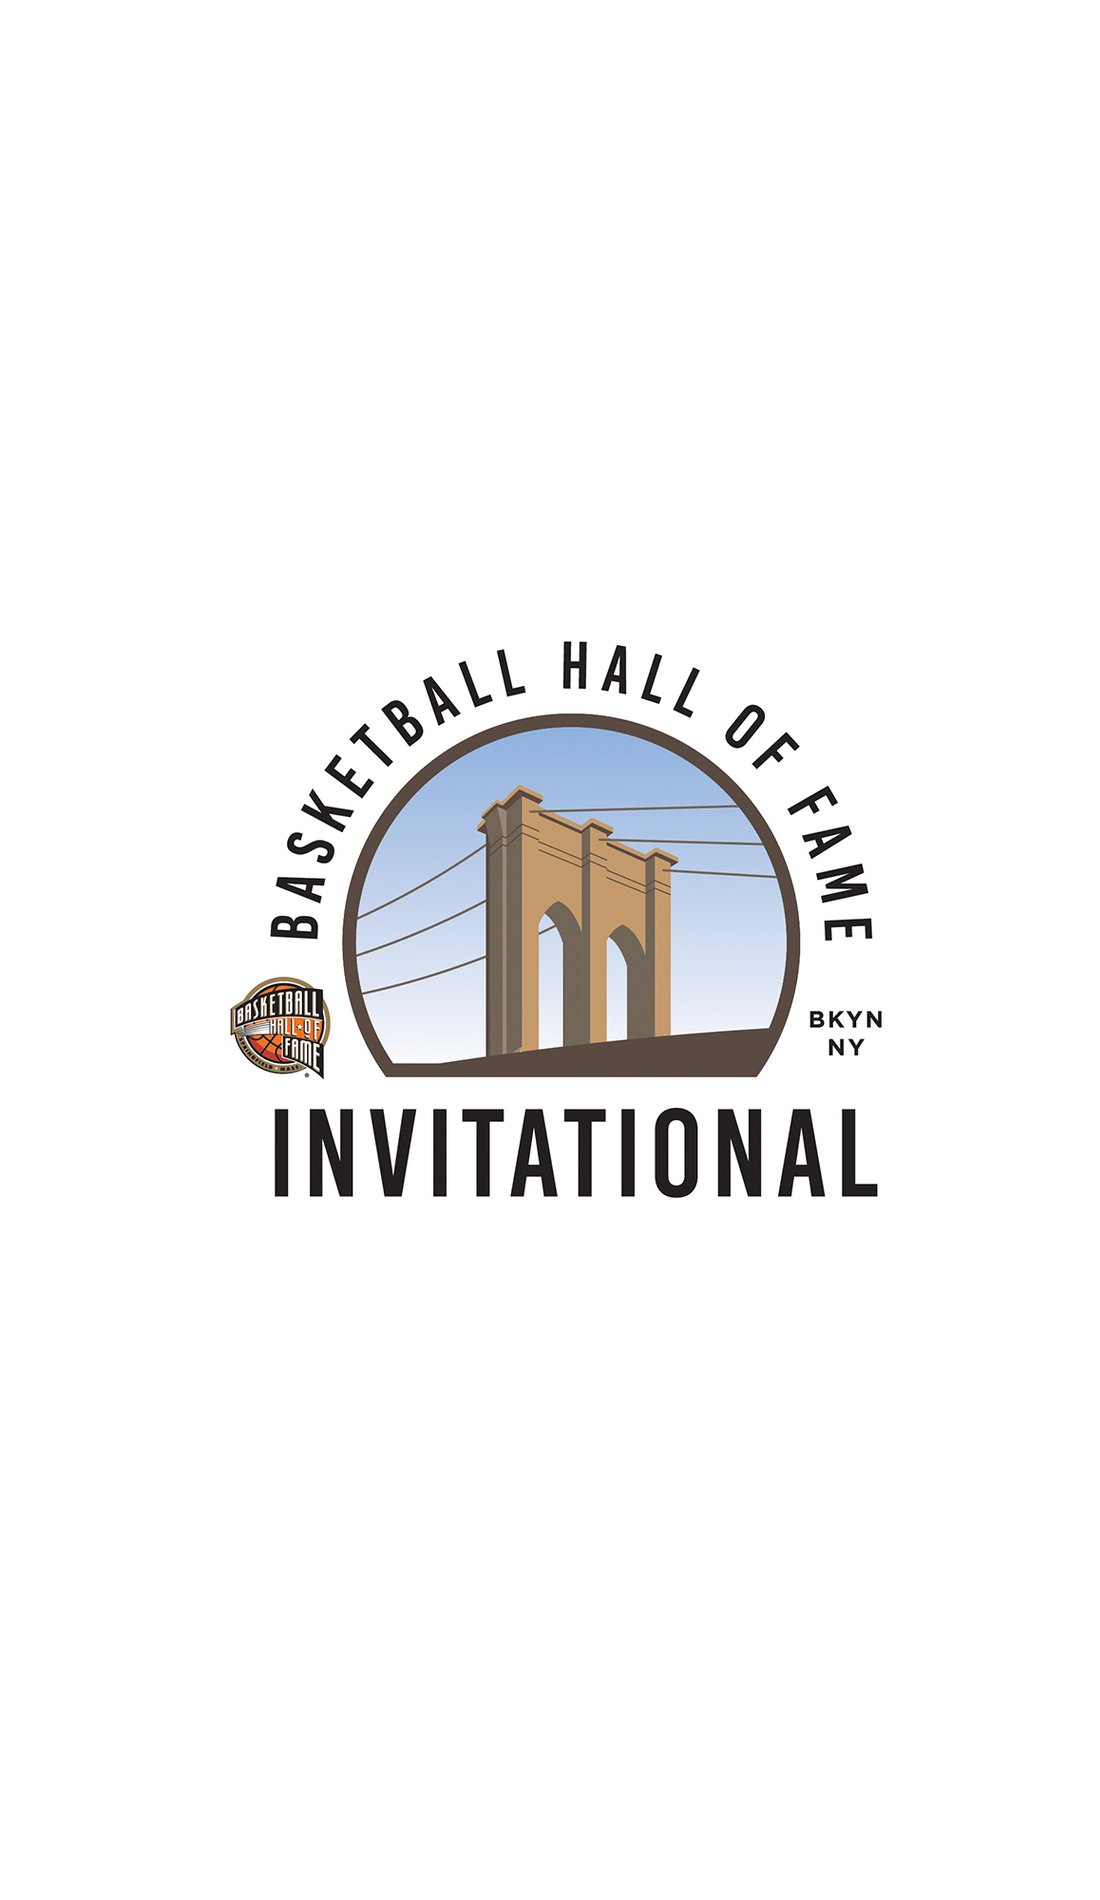 A Basketball Hall of Fame Invitational live event